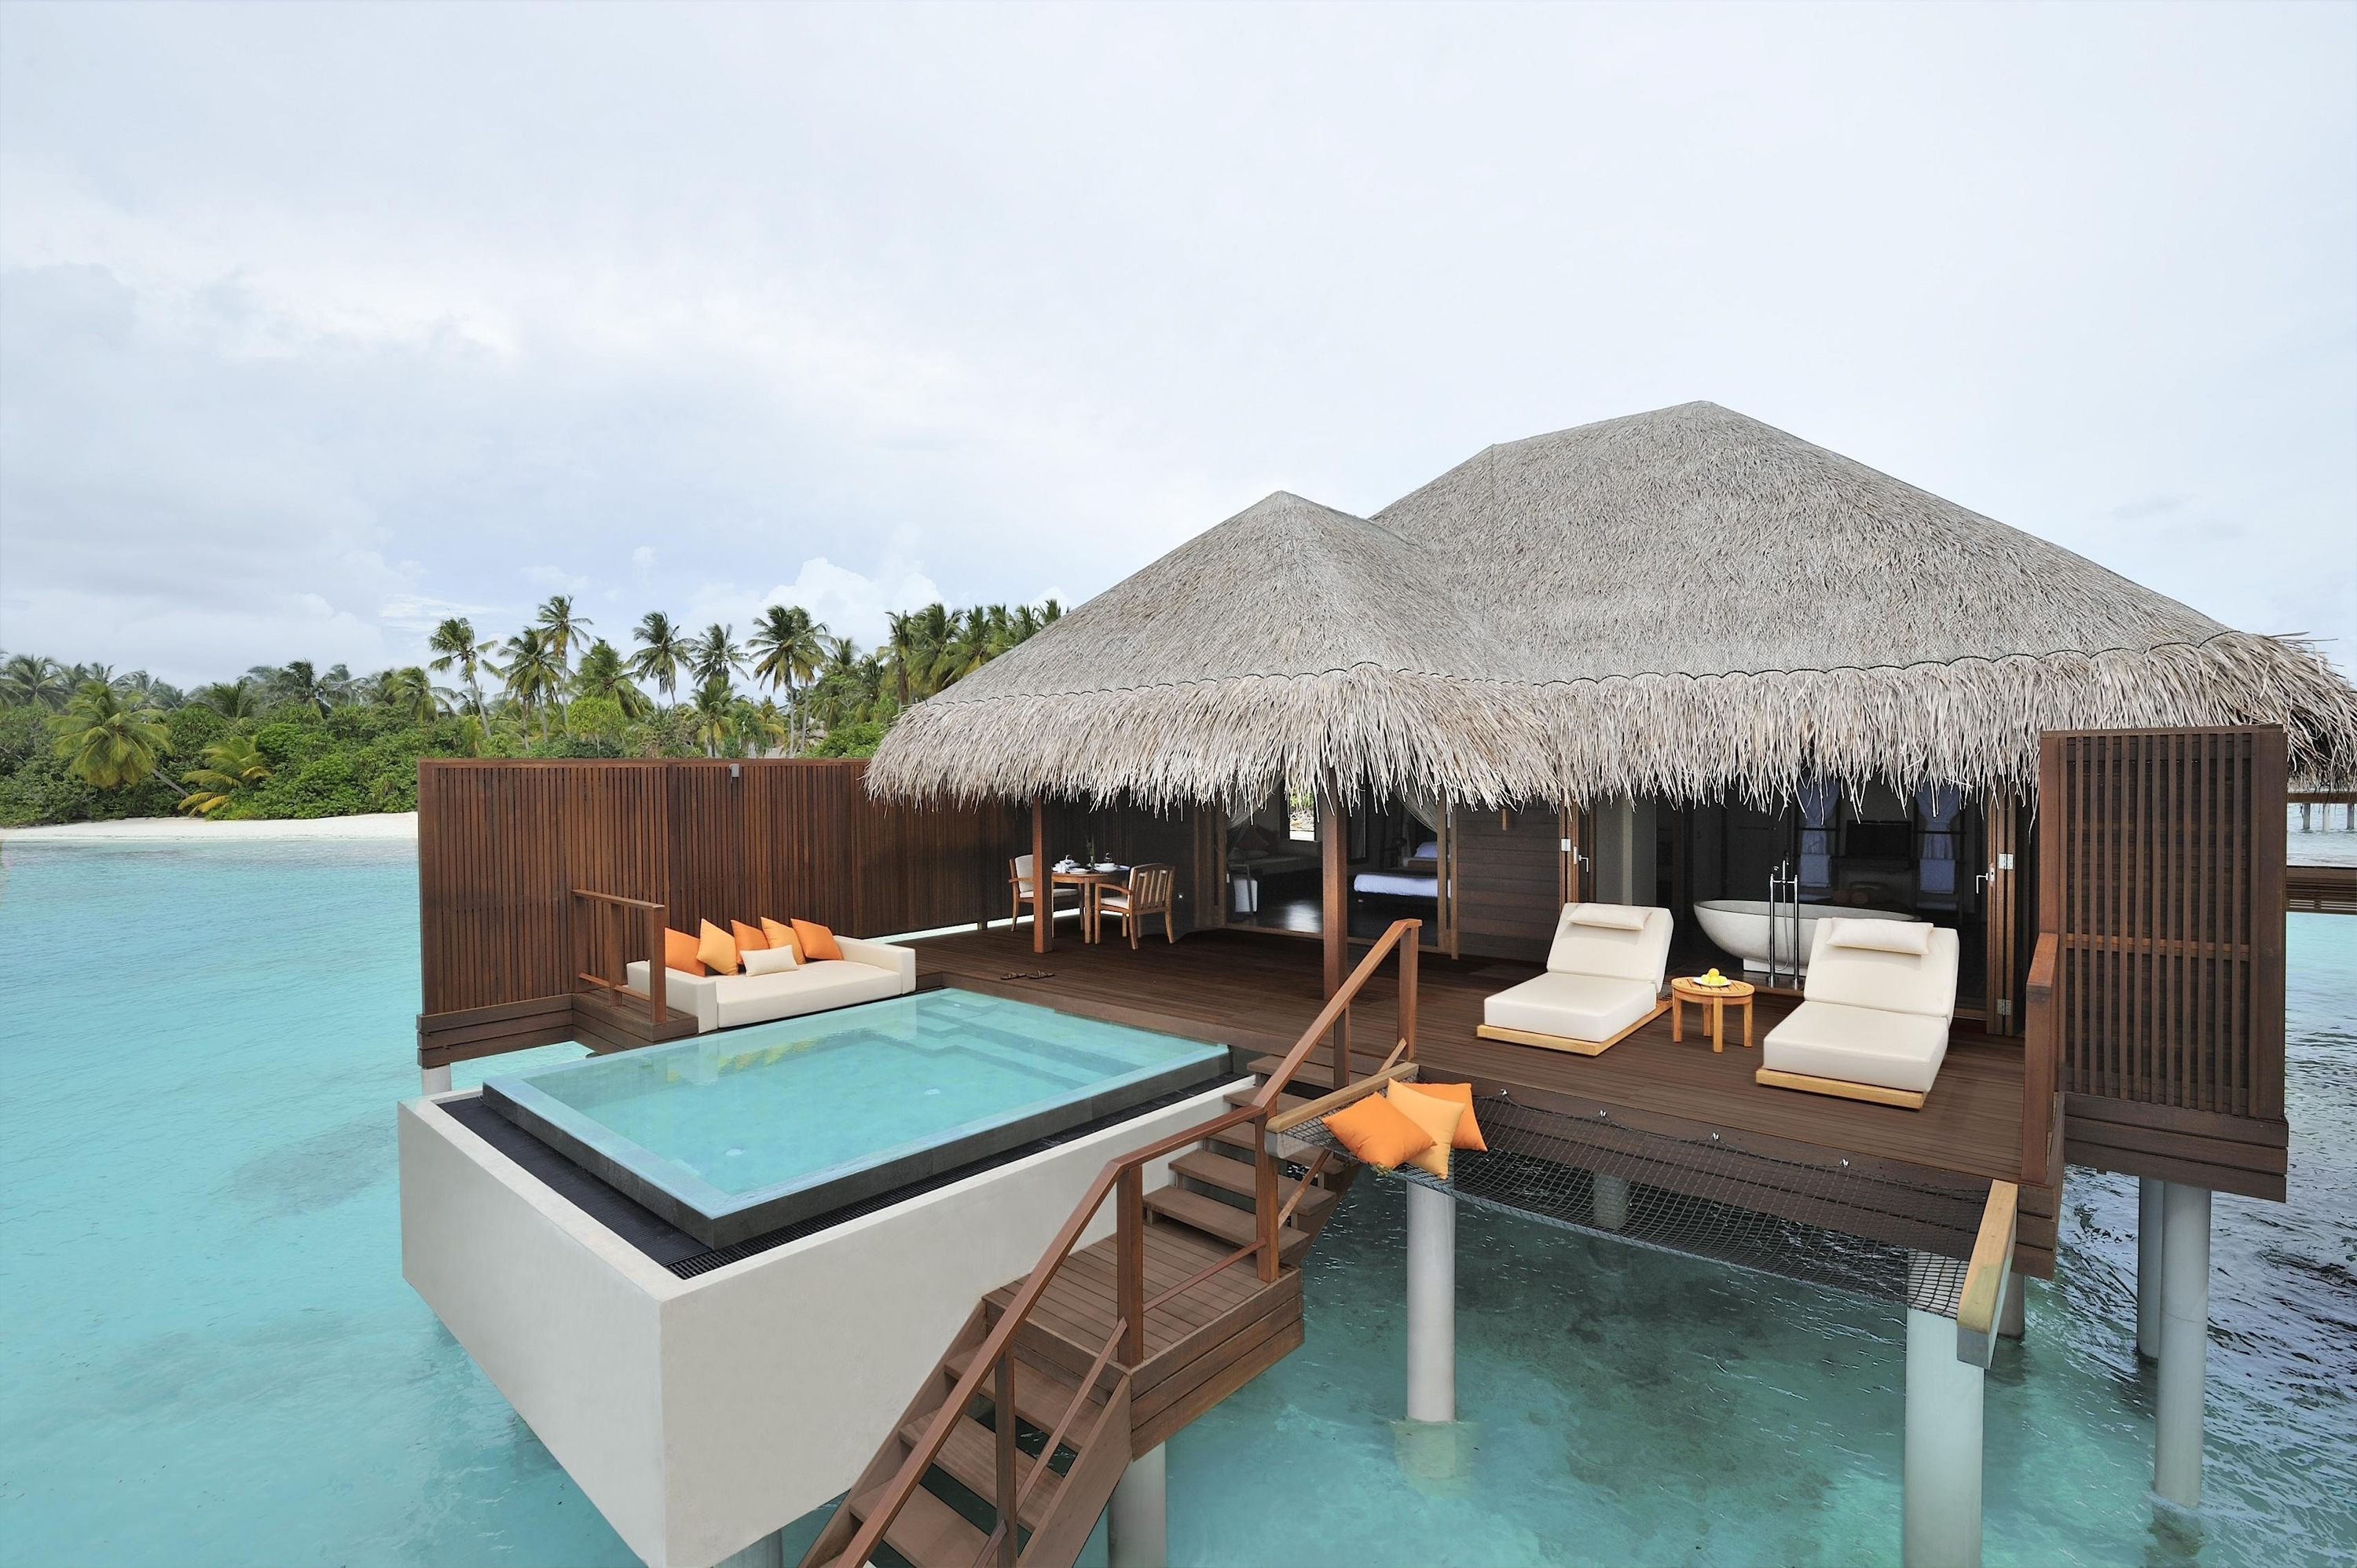 pool, maldives, palms, interior, miscellanea, miscellaneous, ocean, house, island, cushions, pillows, sofas, jacuzzi